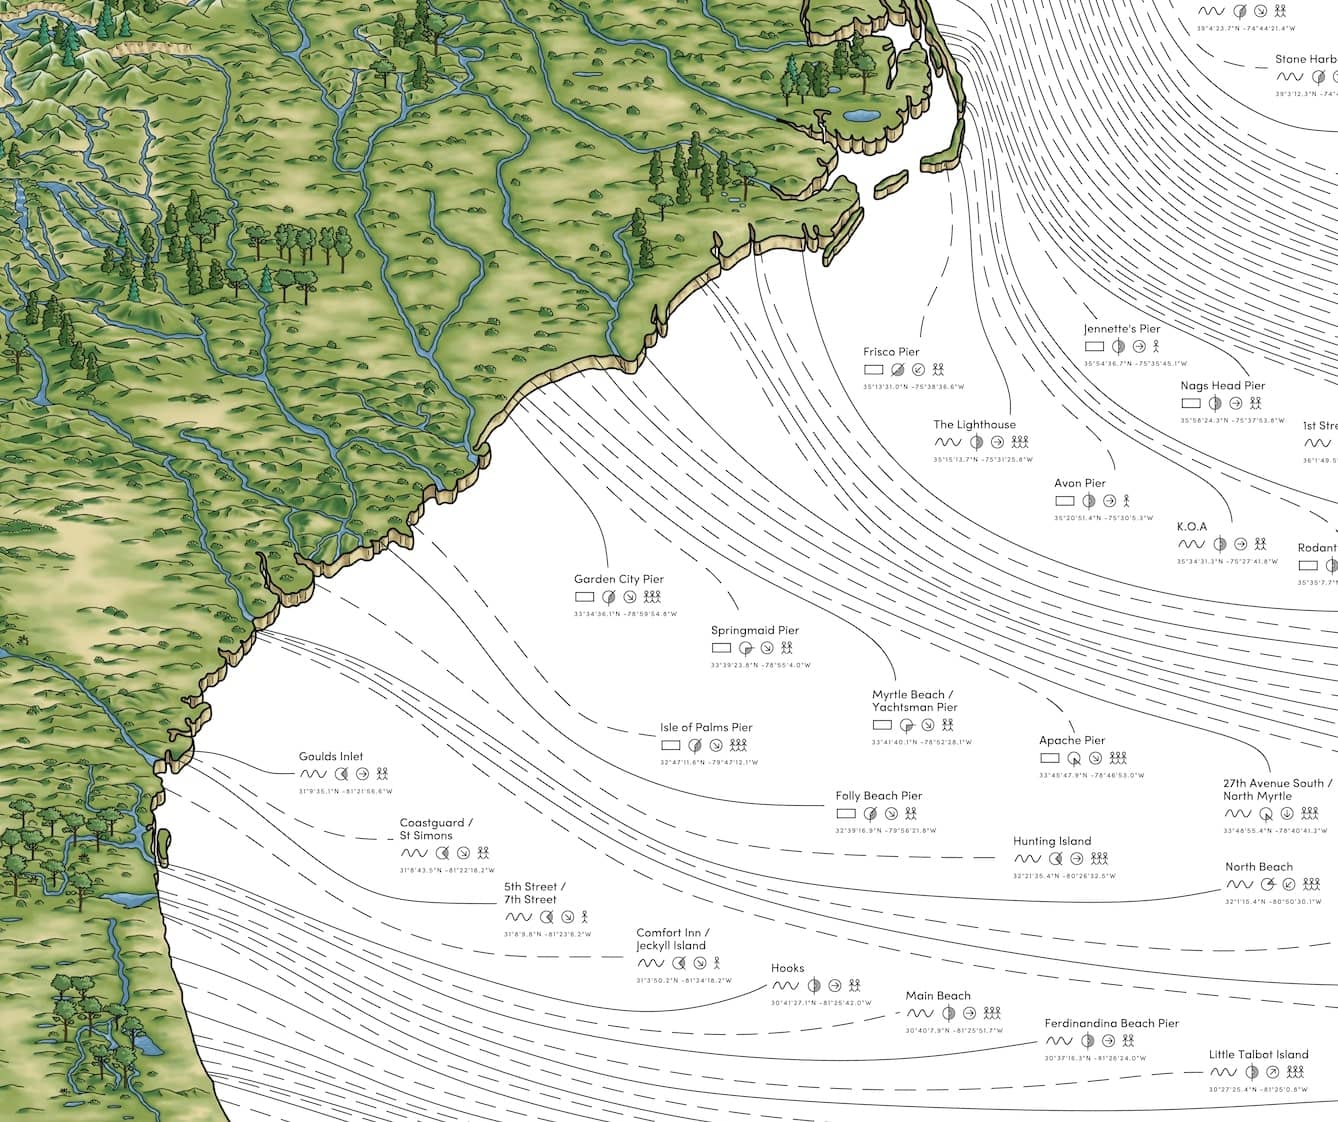 The US East Coast Surf Map